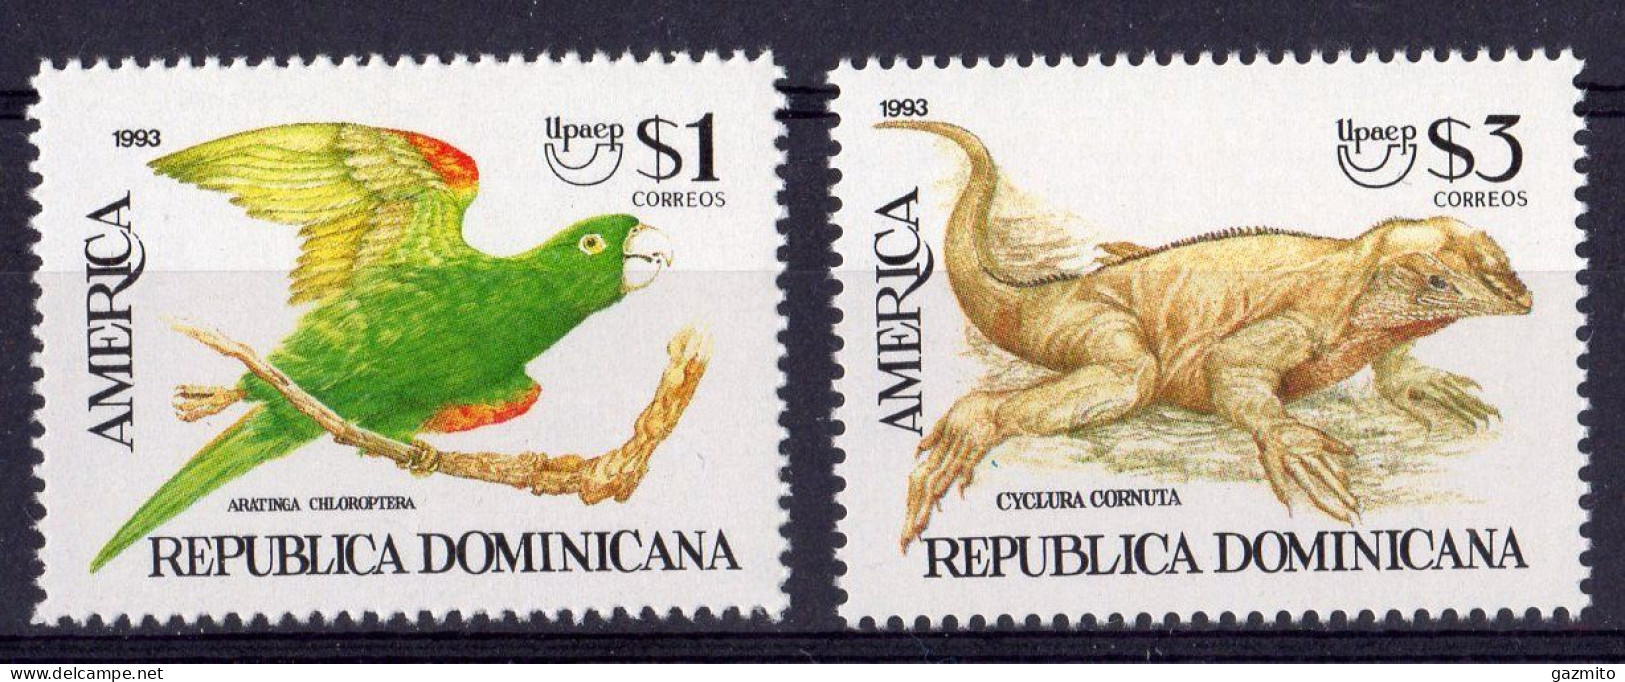 Dominicana 1993, UPAEP, Parrot, Iguana, 2val - UPU (Universal Postal Union)